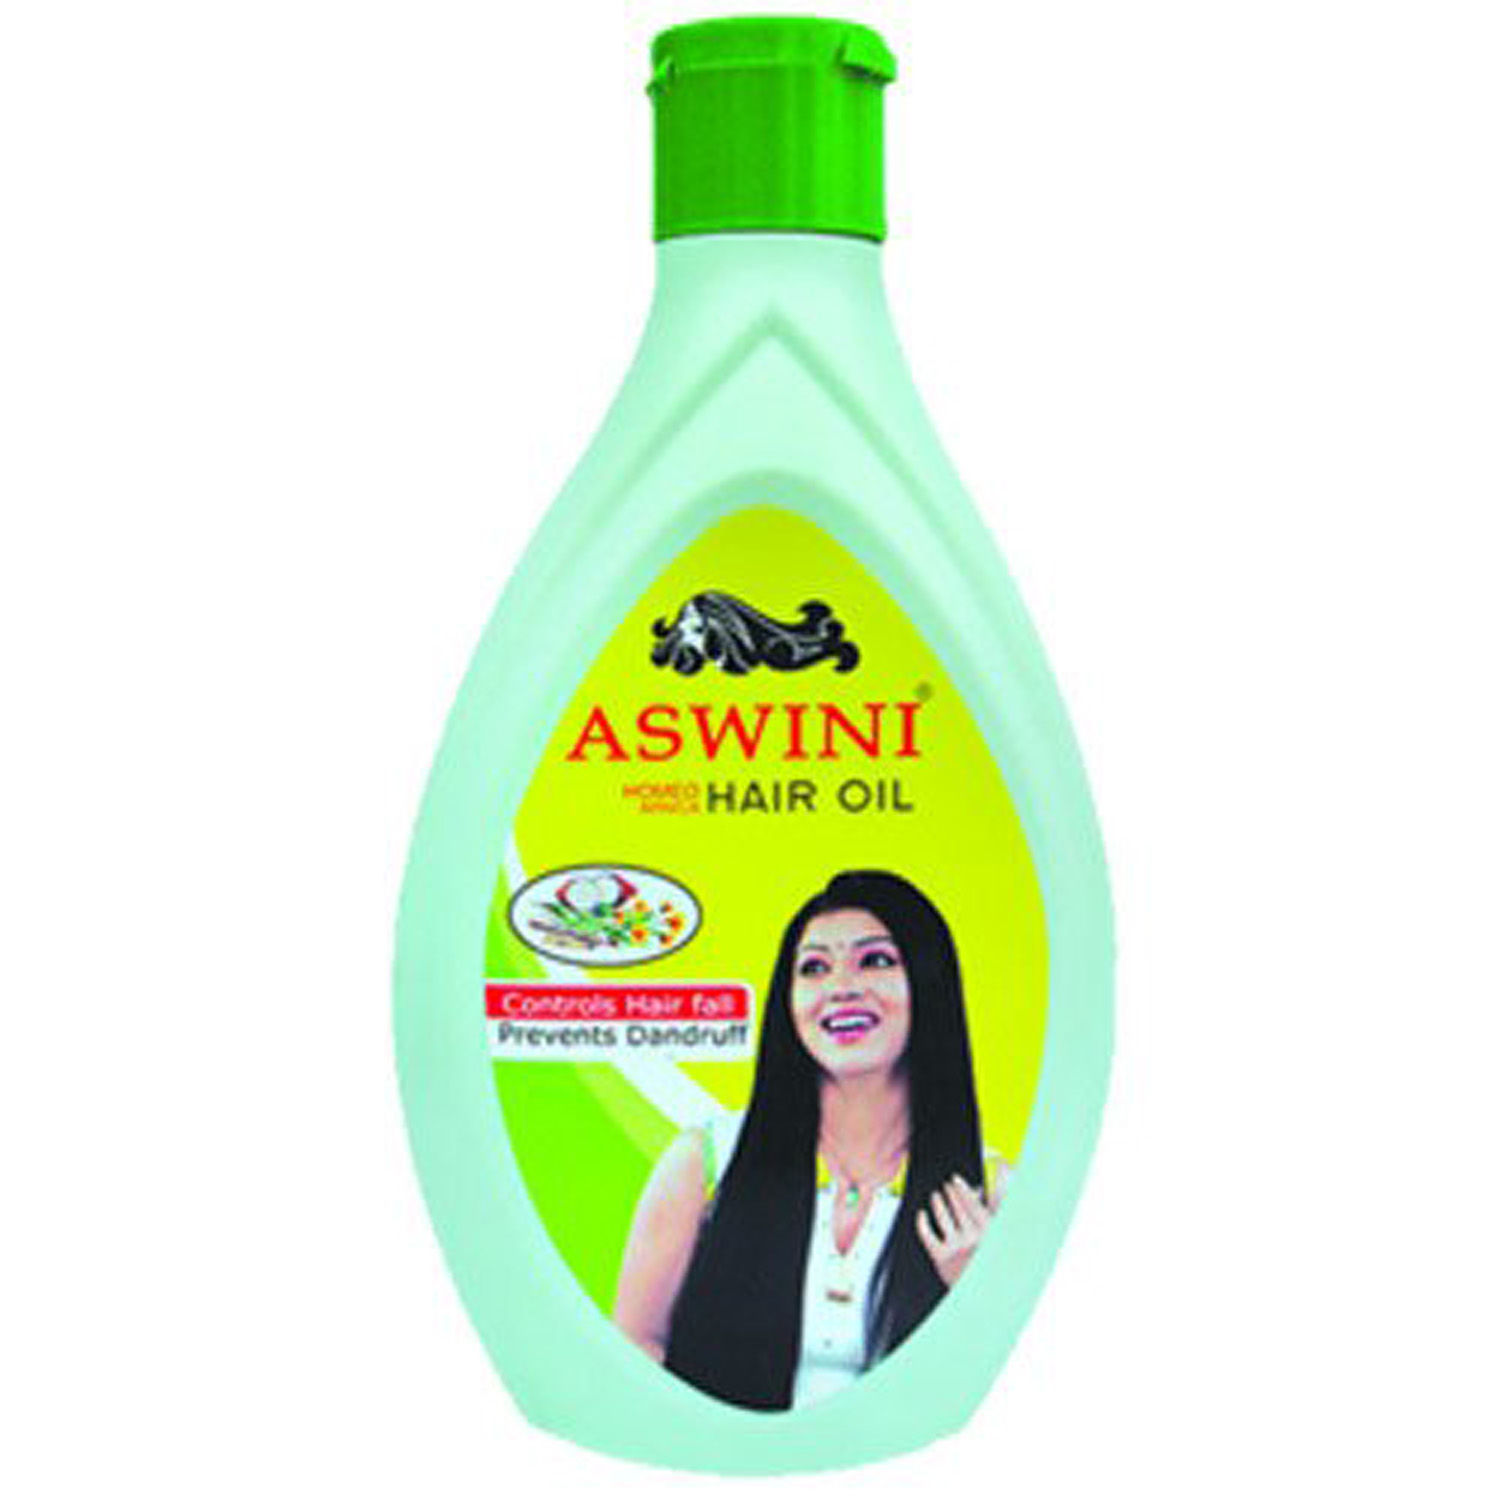 Aswini Hair Oil, 400 ml, Pack of 1 